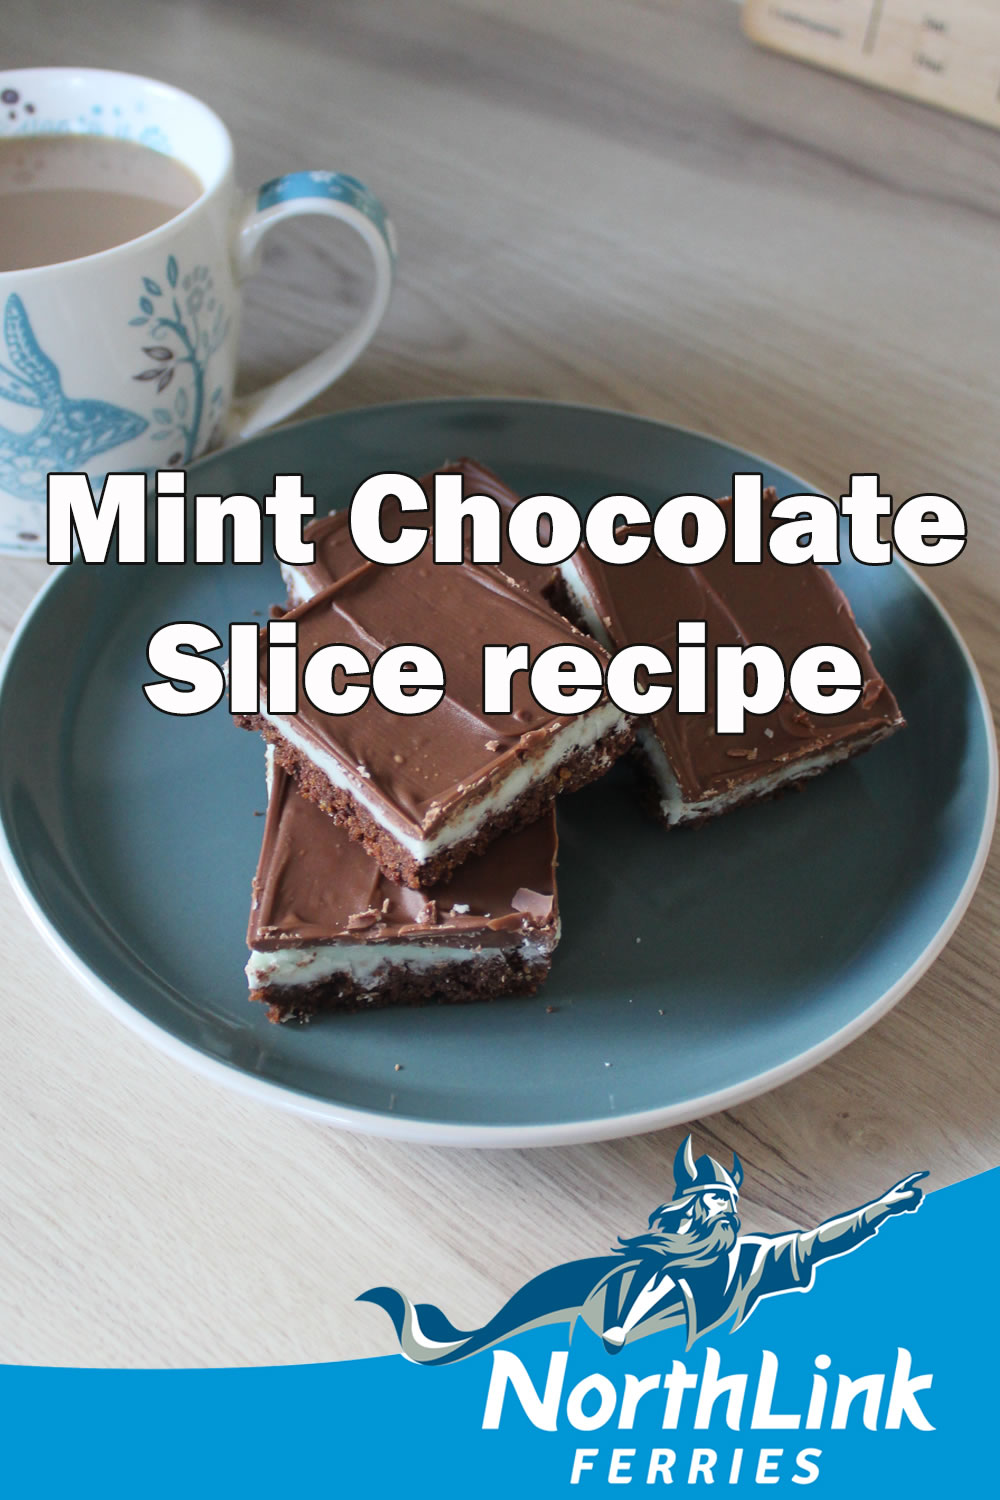 Mint Chocolate Slice recipe